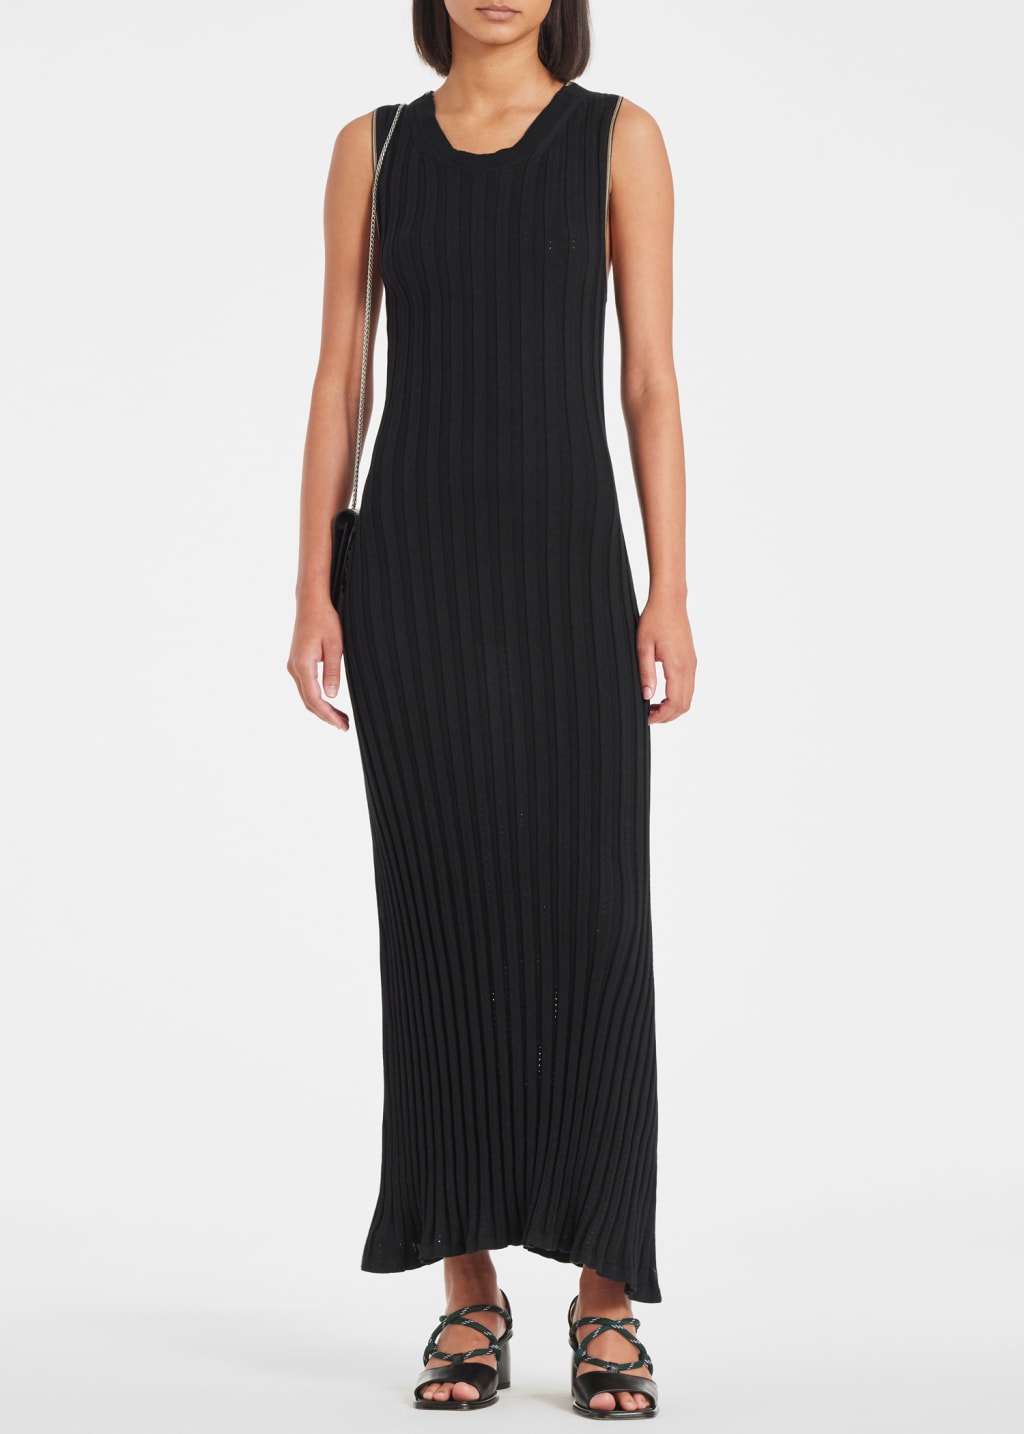 Model View - Women's Black 'Signature Stripe' V Neck Knitted Dress Paul Smith